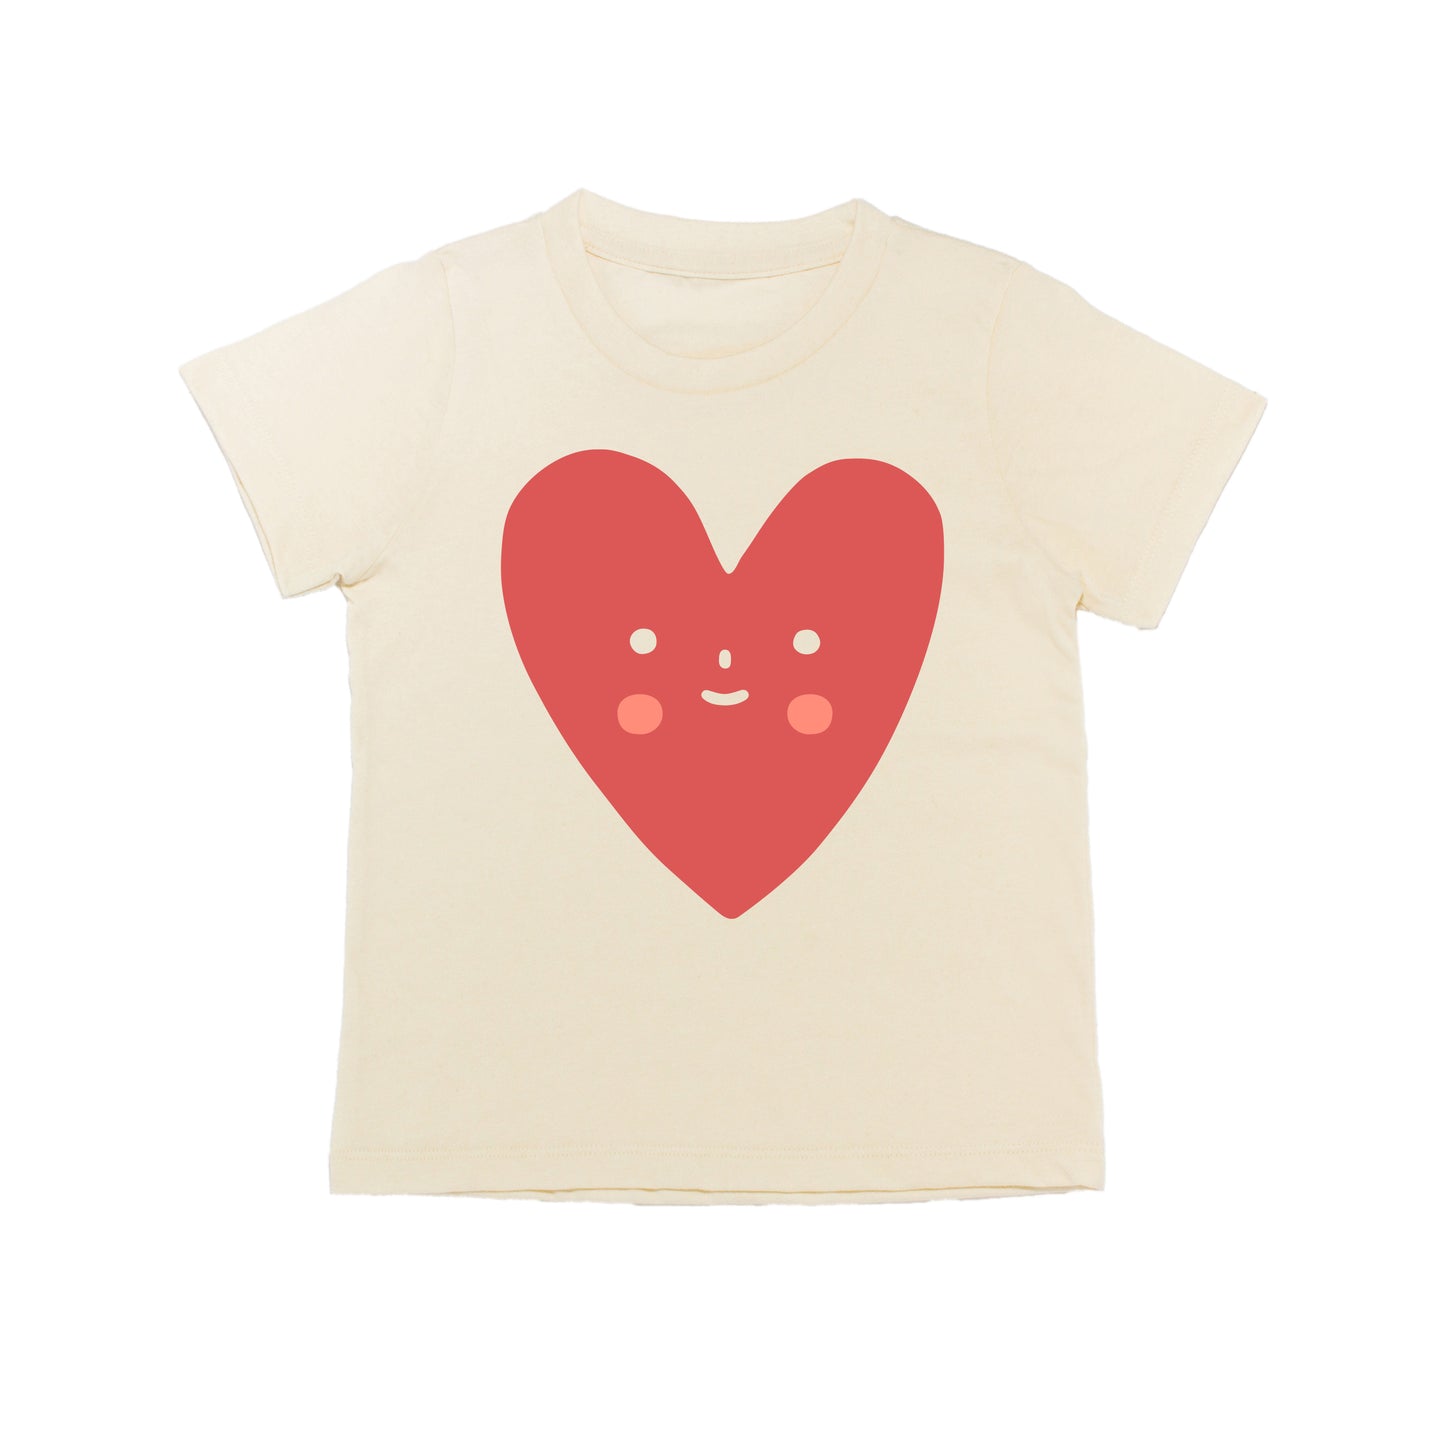 Suzy Ultman Kid's Heart T-Shirt